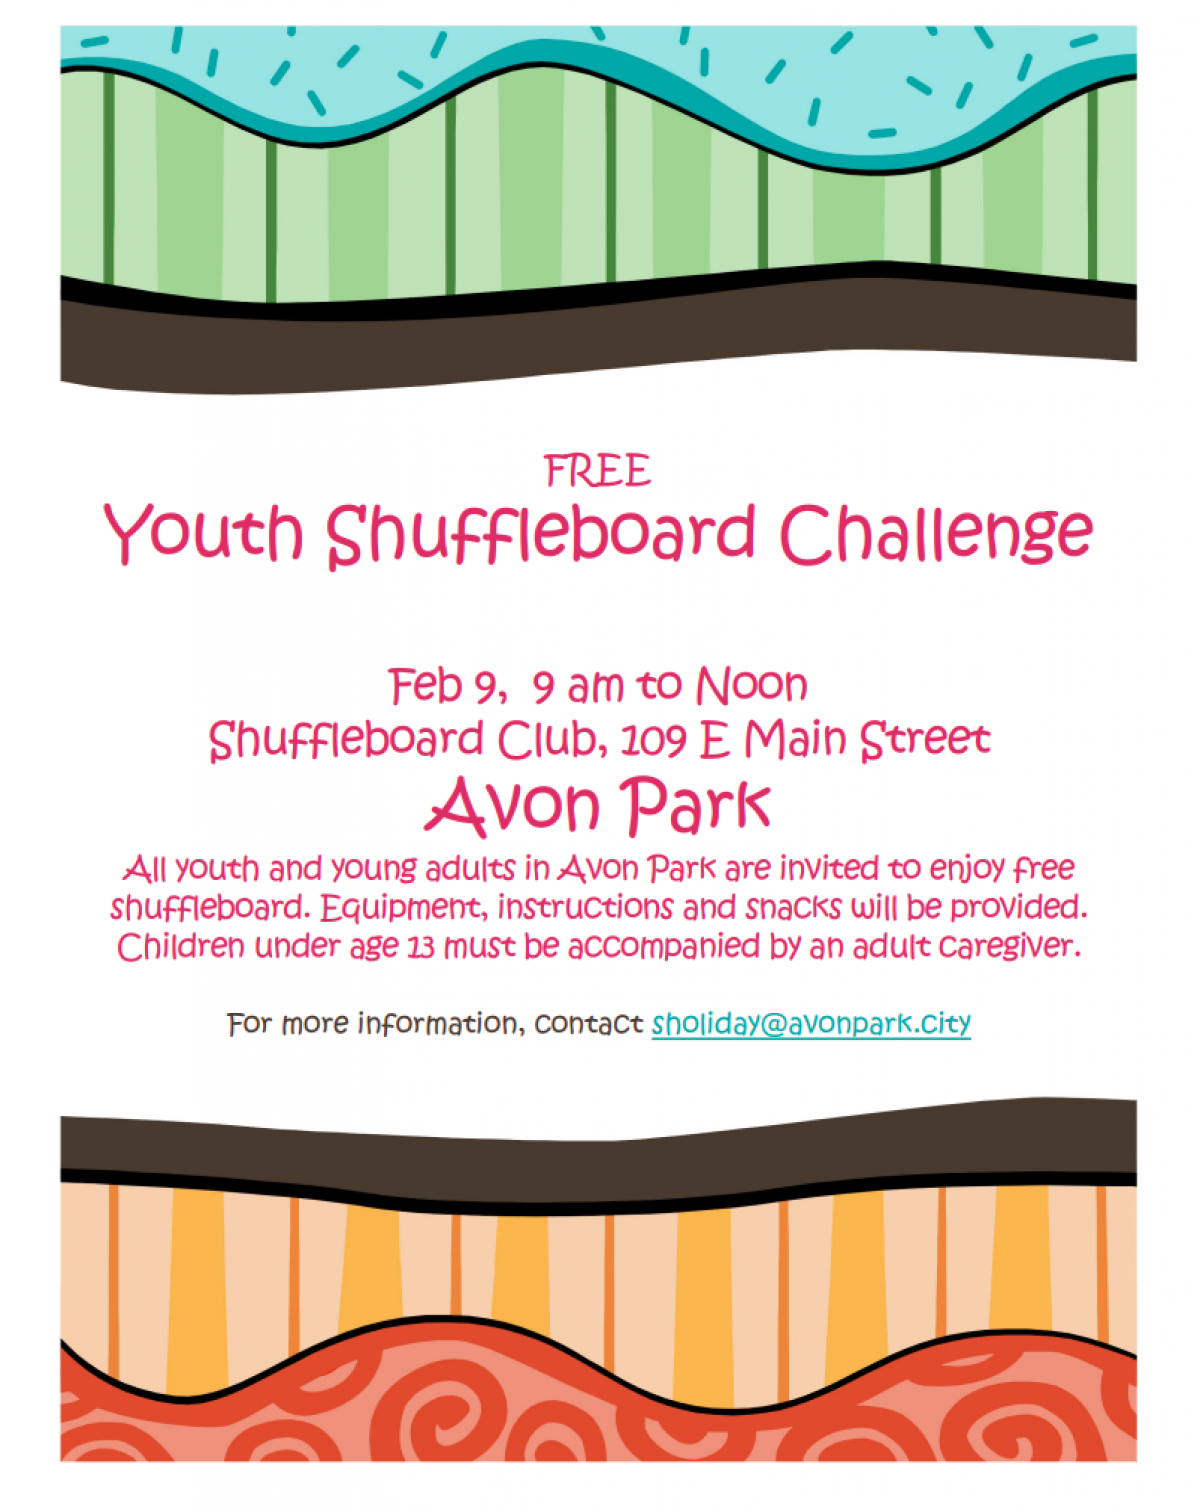 Youth Shuffleboard Challenge, Feb 9, 9 am to Noon Shuffleboard Club, 109 E Main Street Avon Park